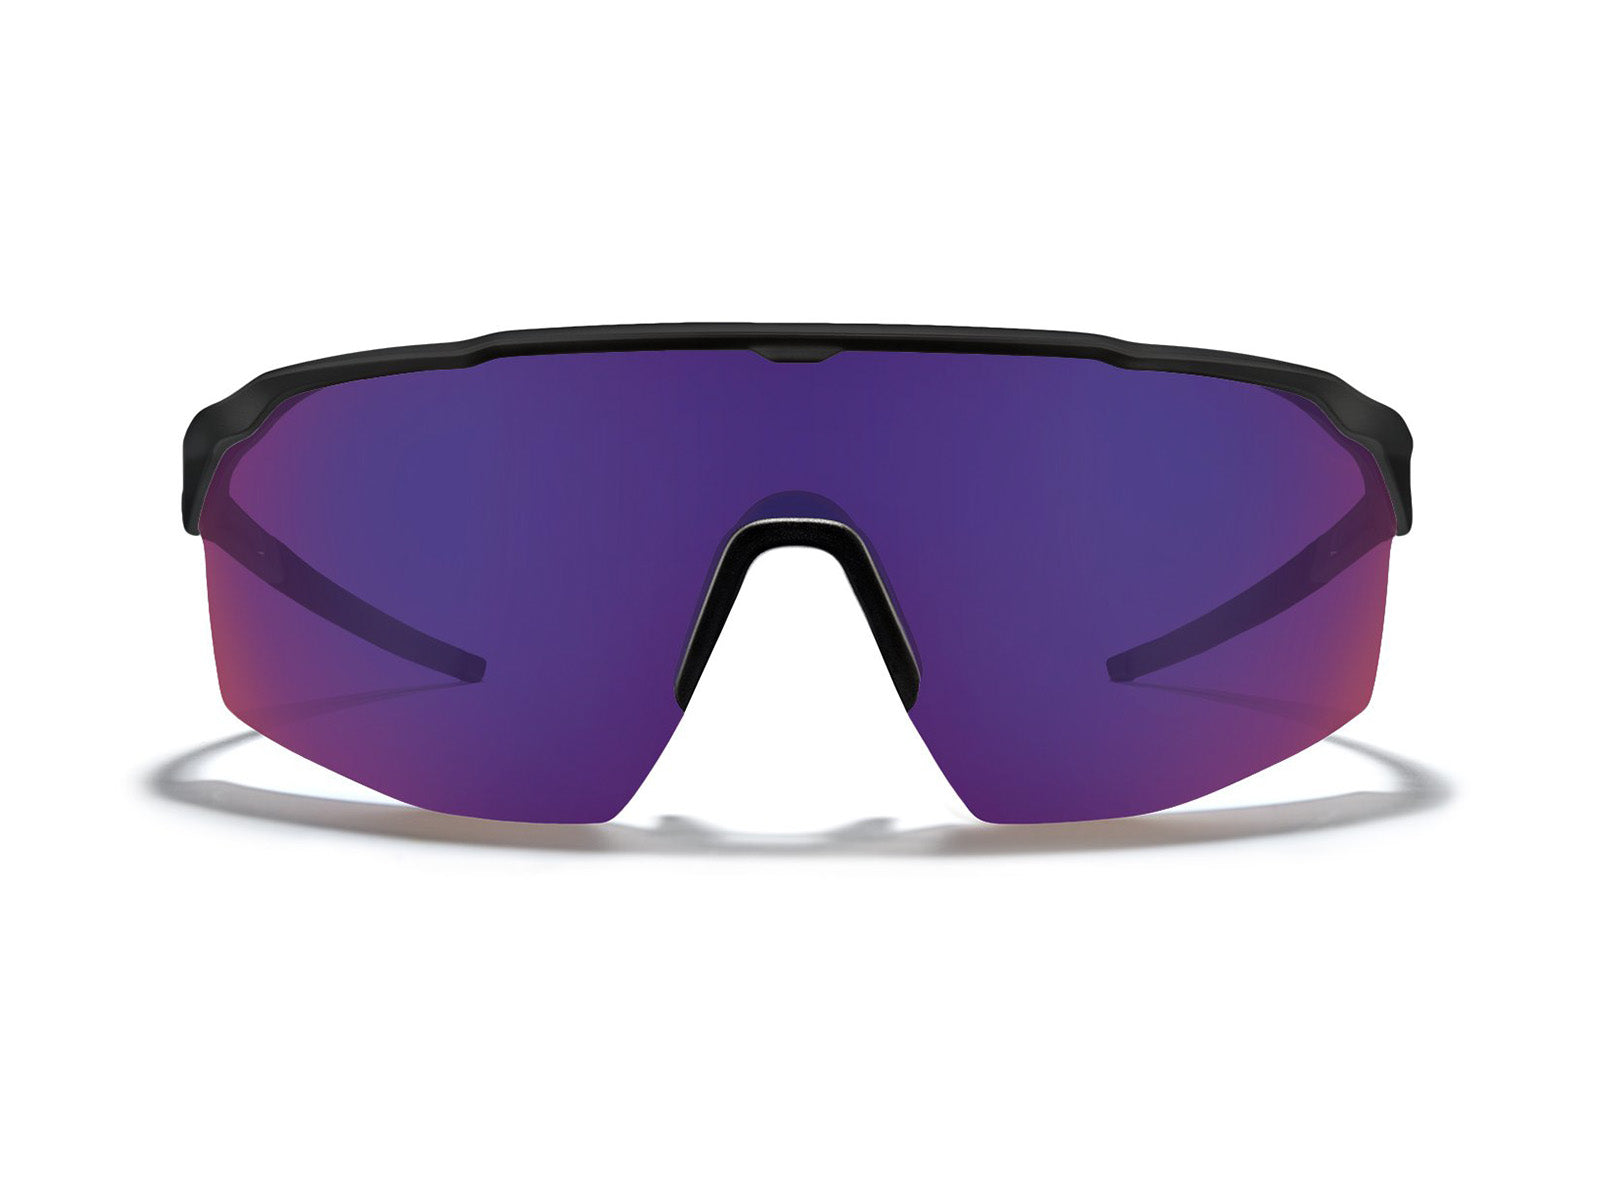 Roka SR-1x Sunglasses with Gloss Race Red Frames - Dark Carbon Lens